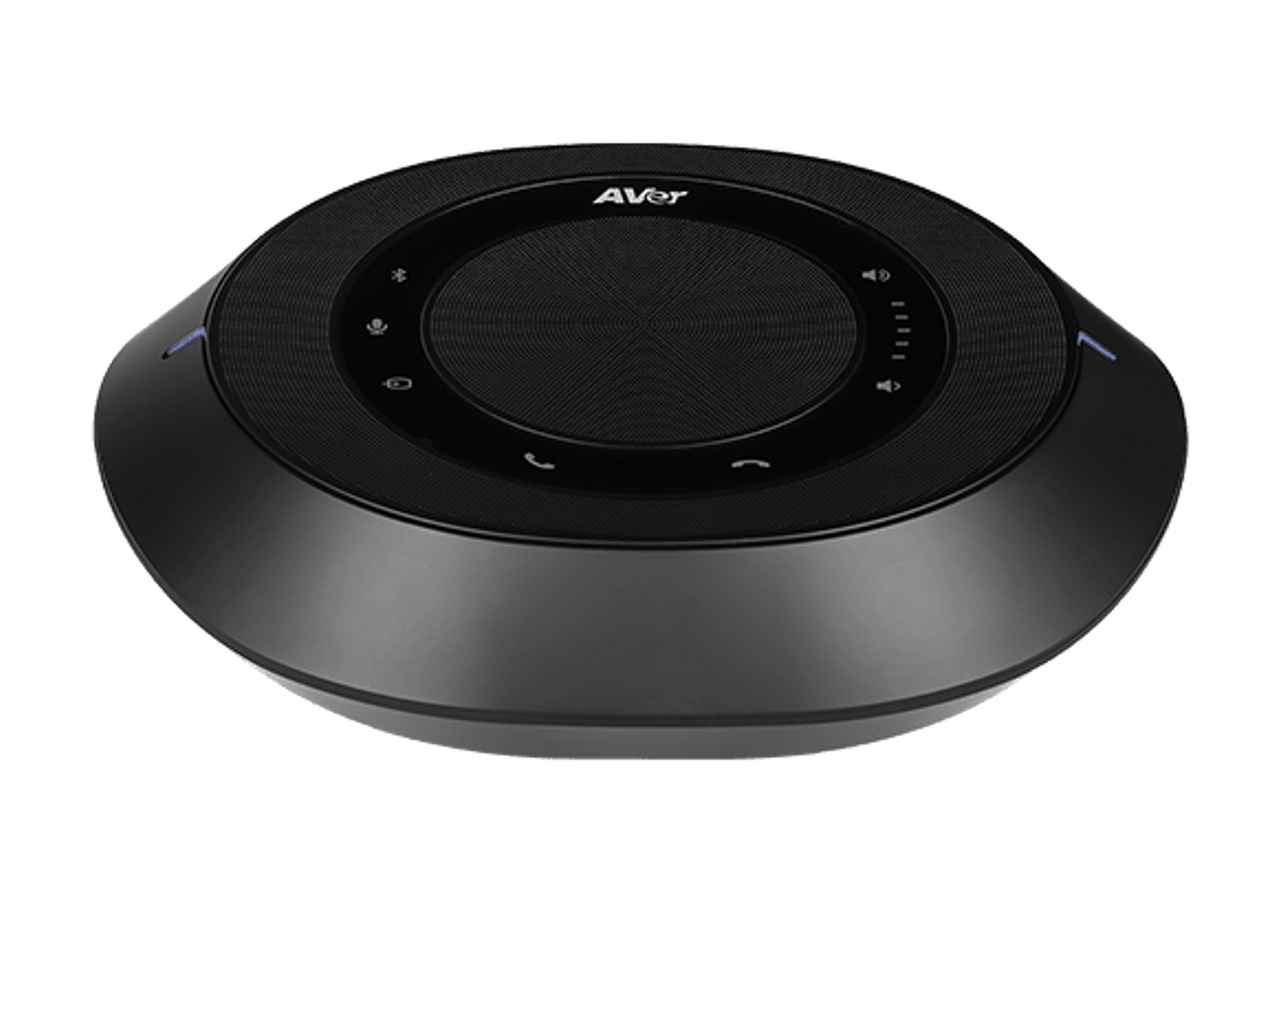 AVer Fone540 Conference Speakerphone